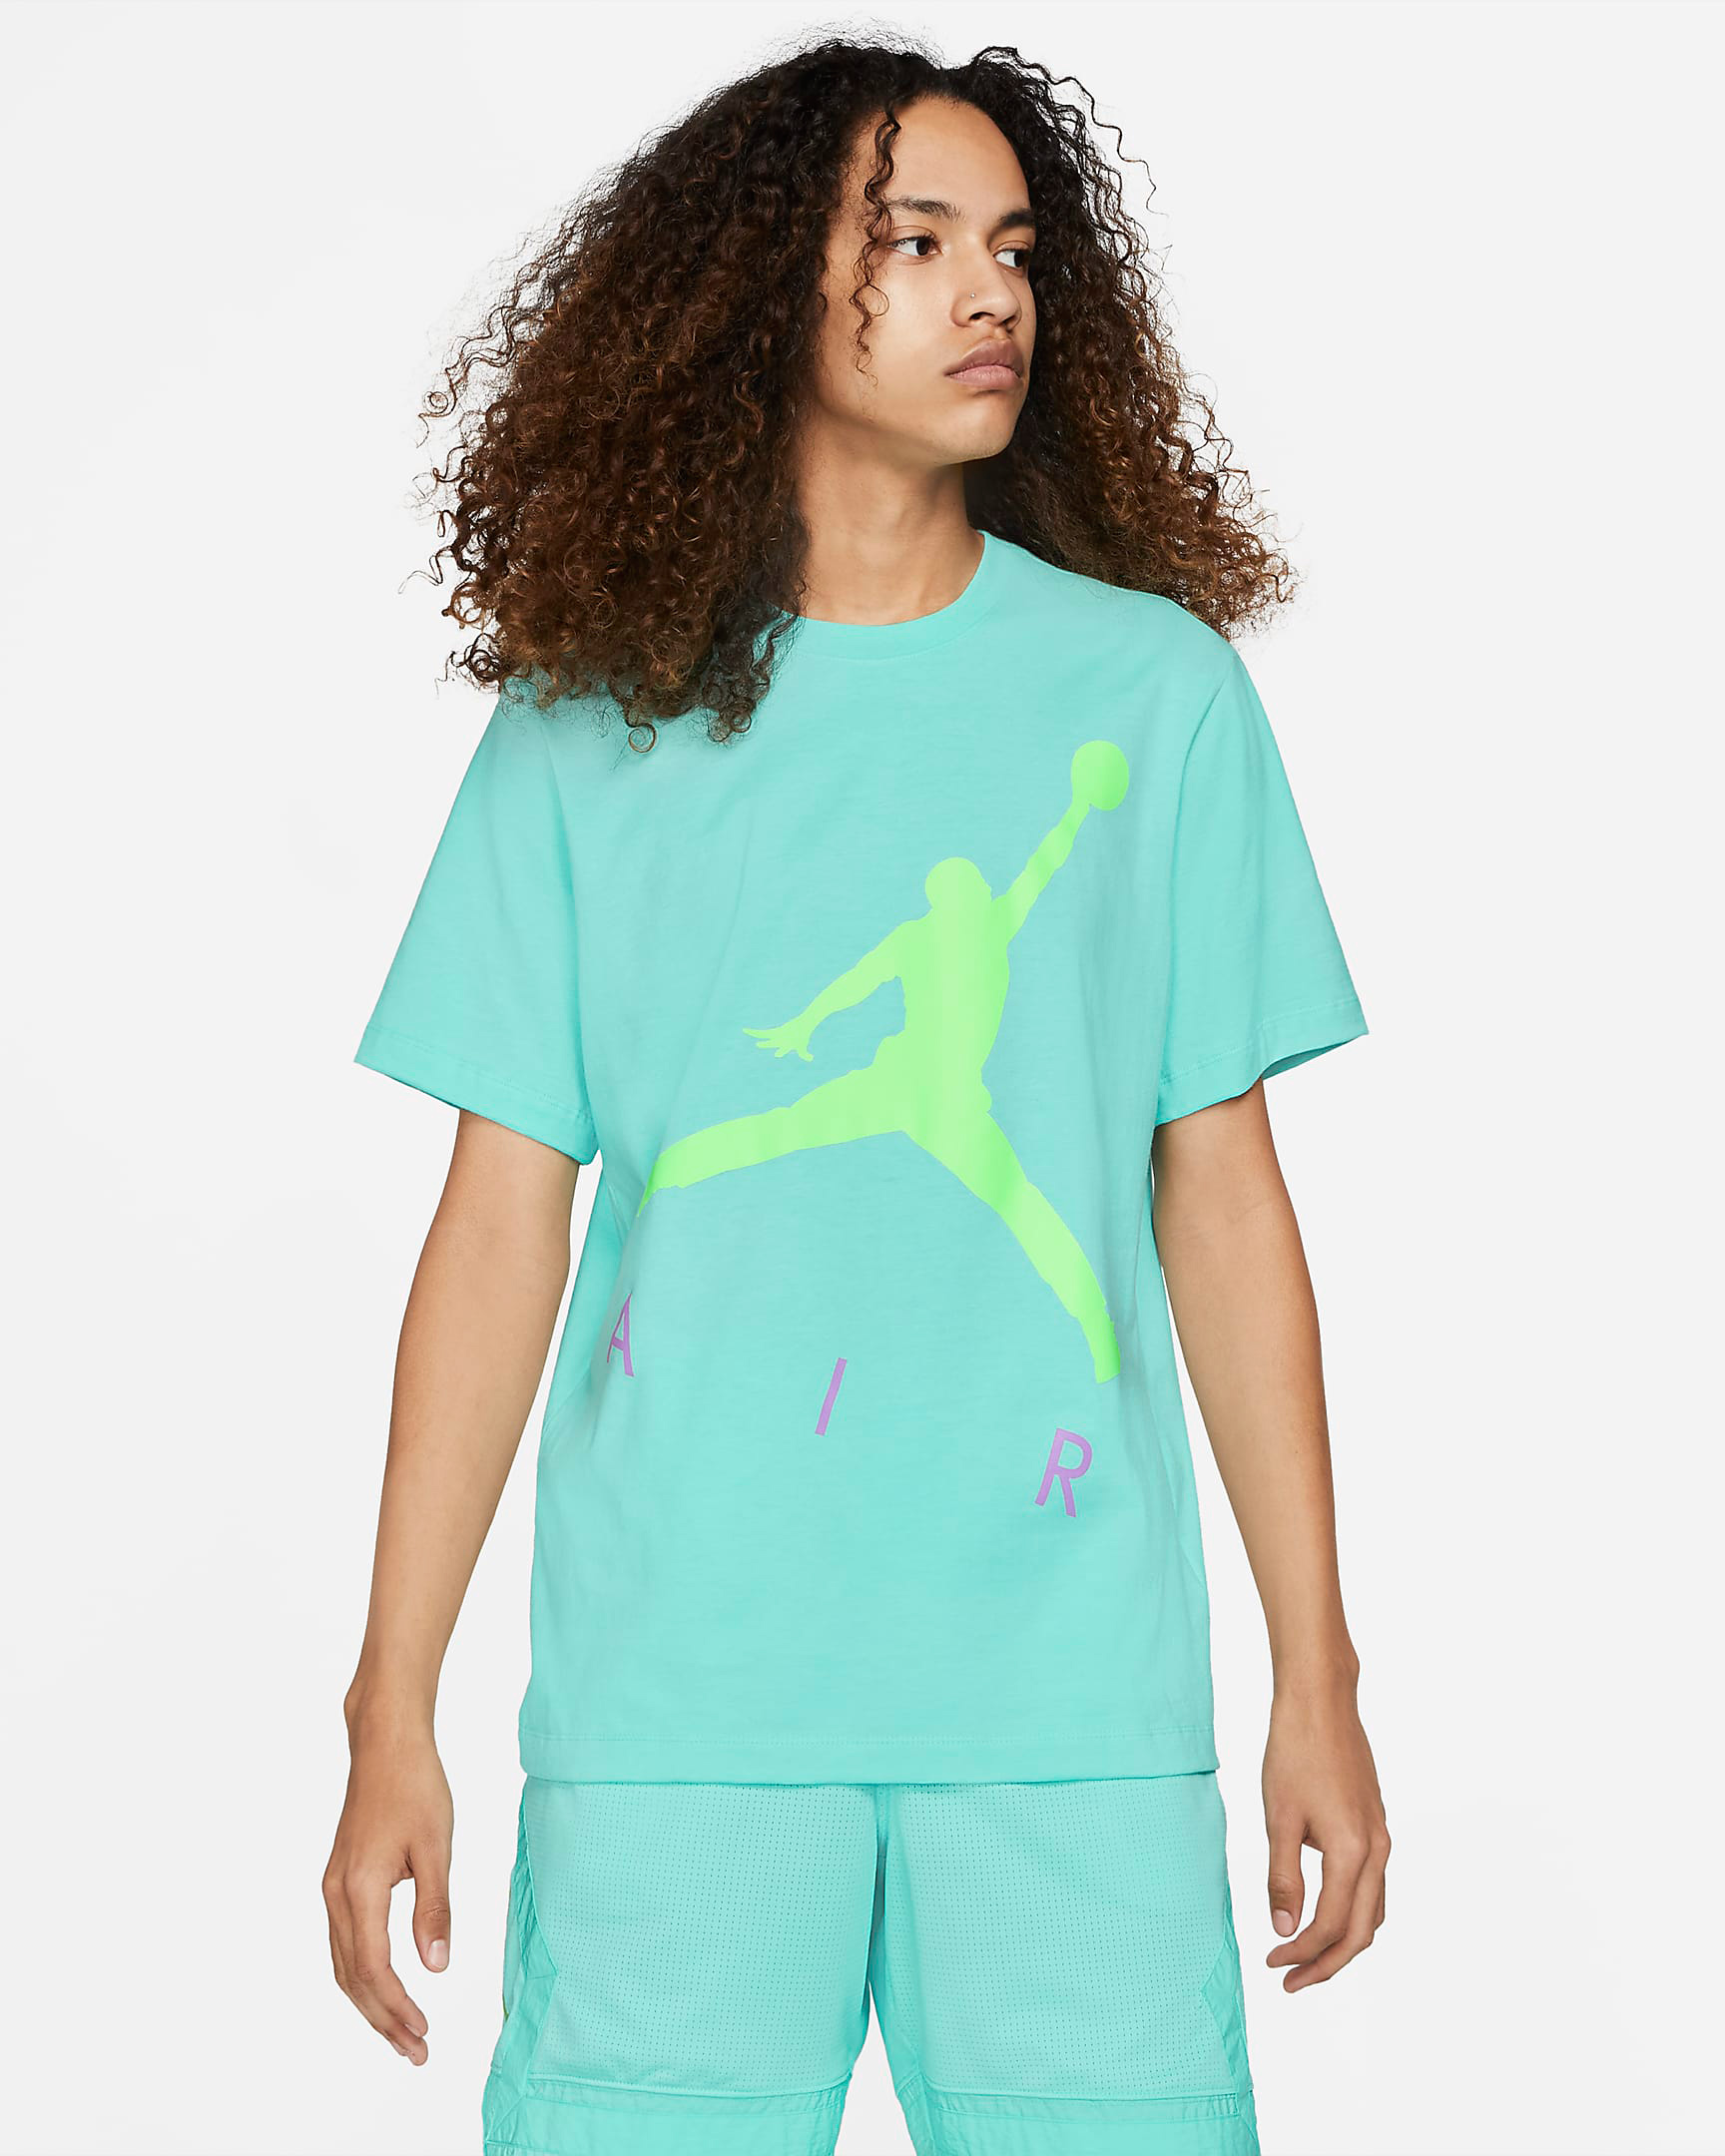 jordan-tropical-twist-jumpman-air-shirt